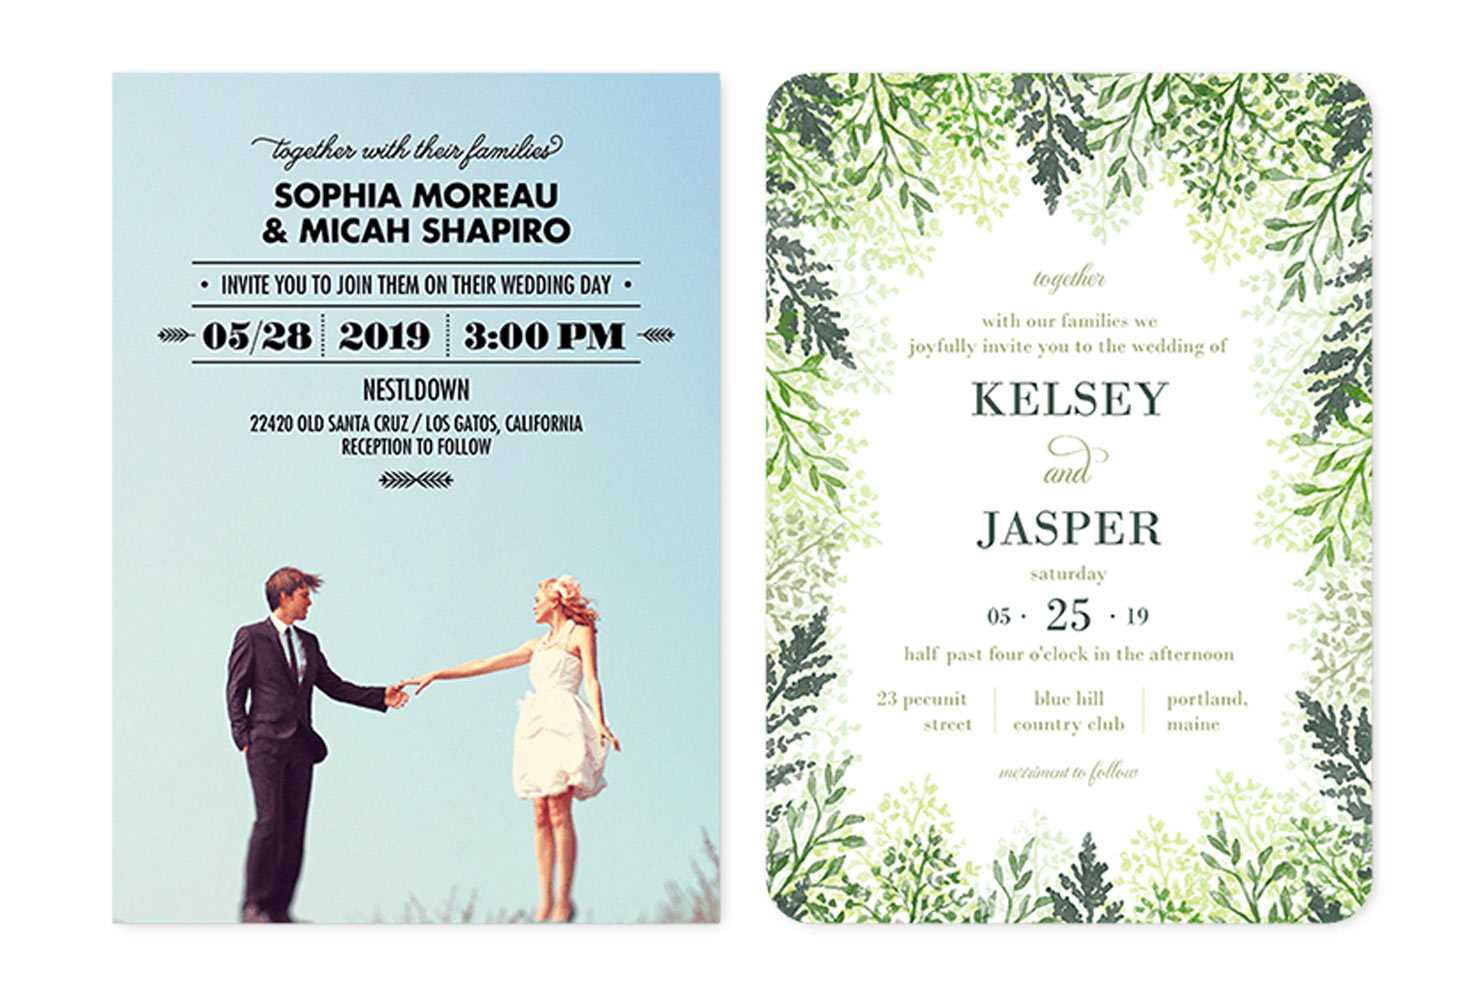 35+ Wedding Invitation Wording Examples 2020 | Shutterfly Inside Church Wedding Invitation Card Template